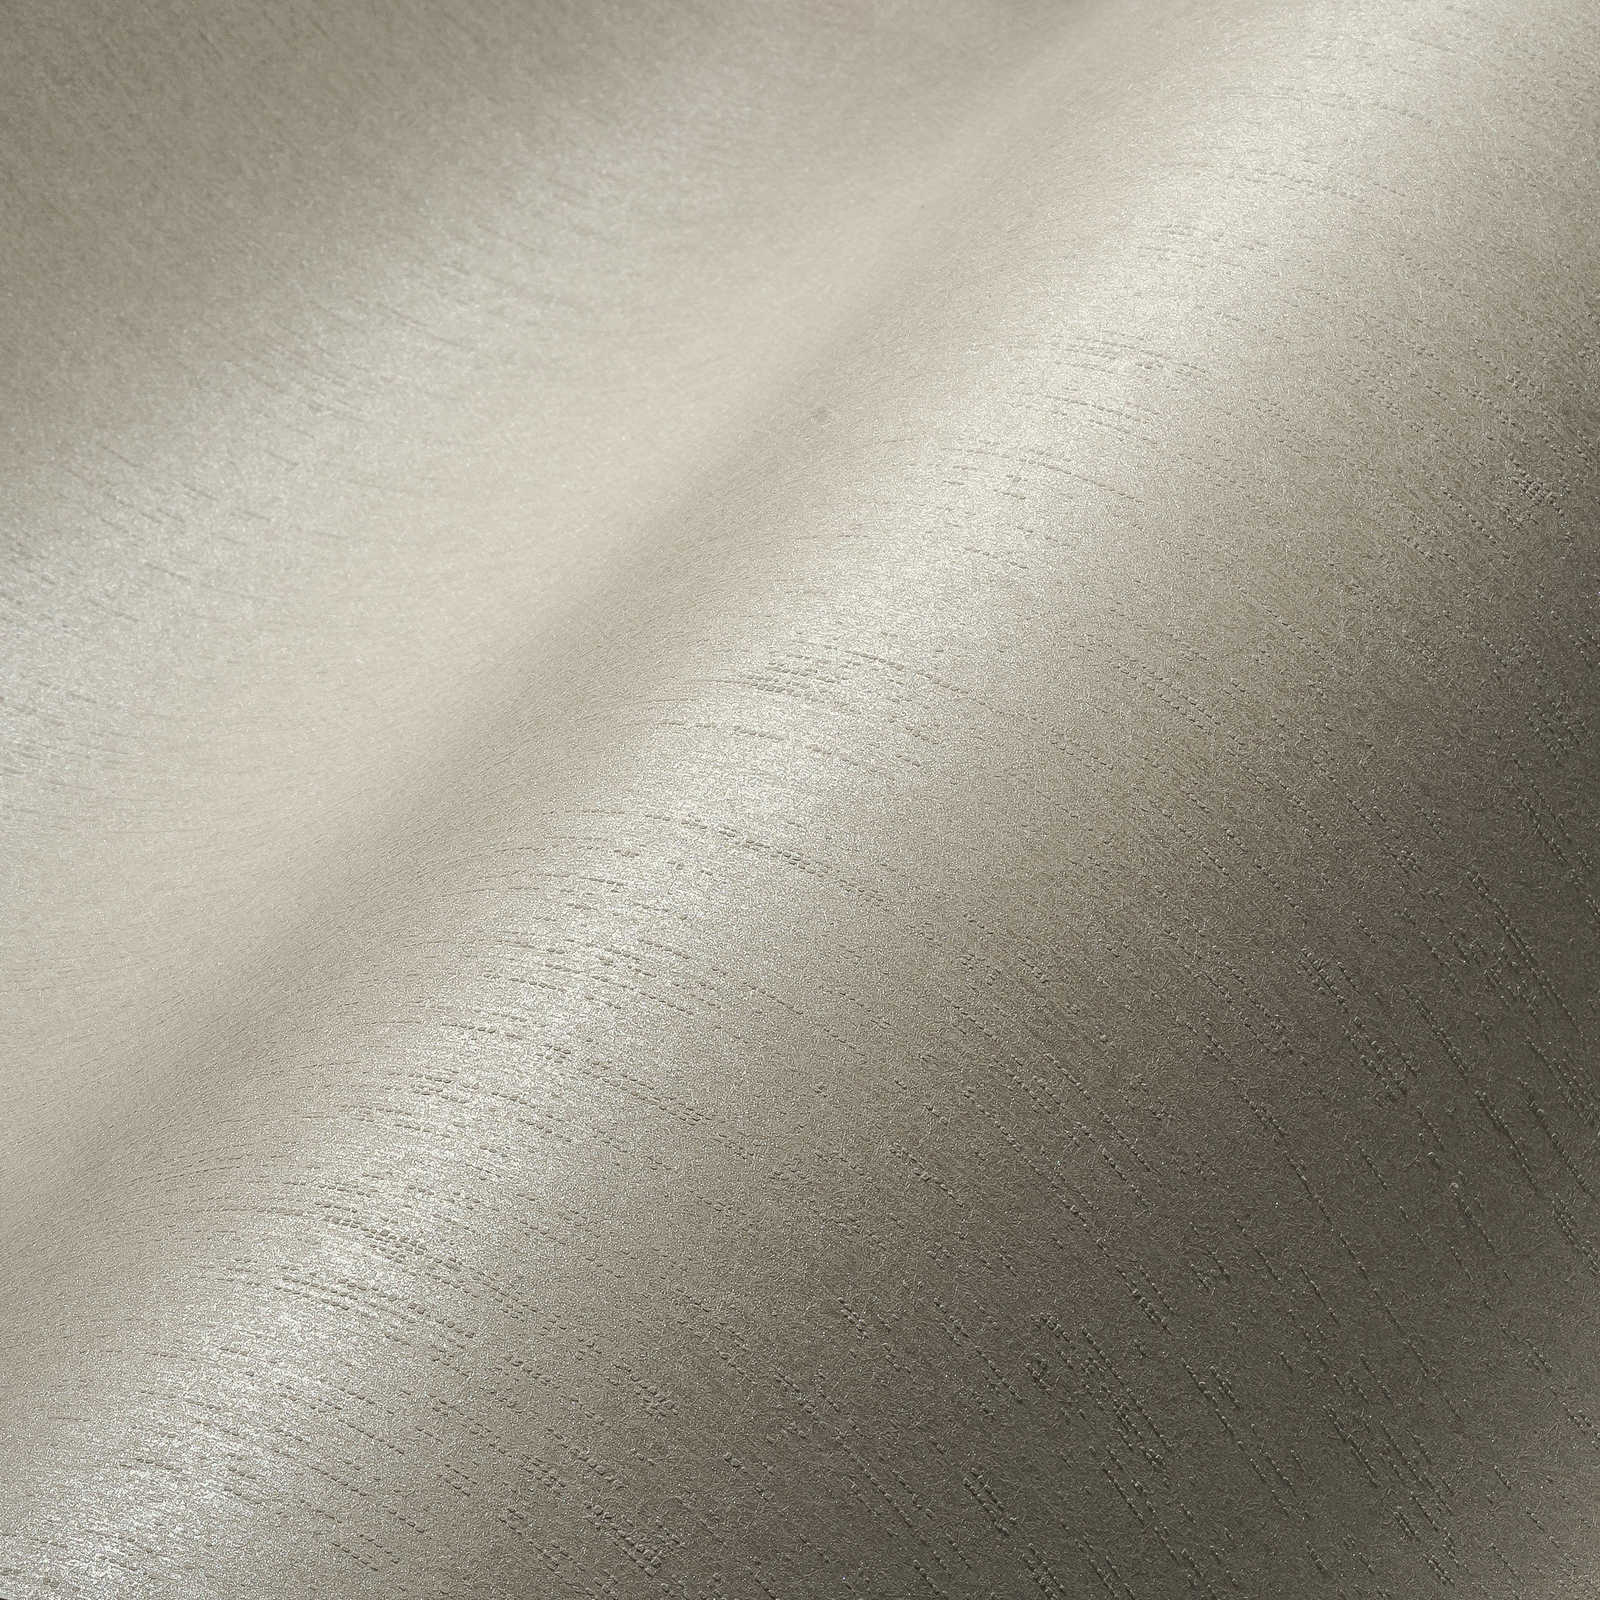             Licht vliesbehang met textiellook & glansafwerking - wit
        